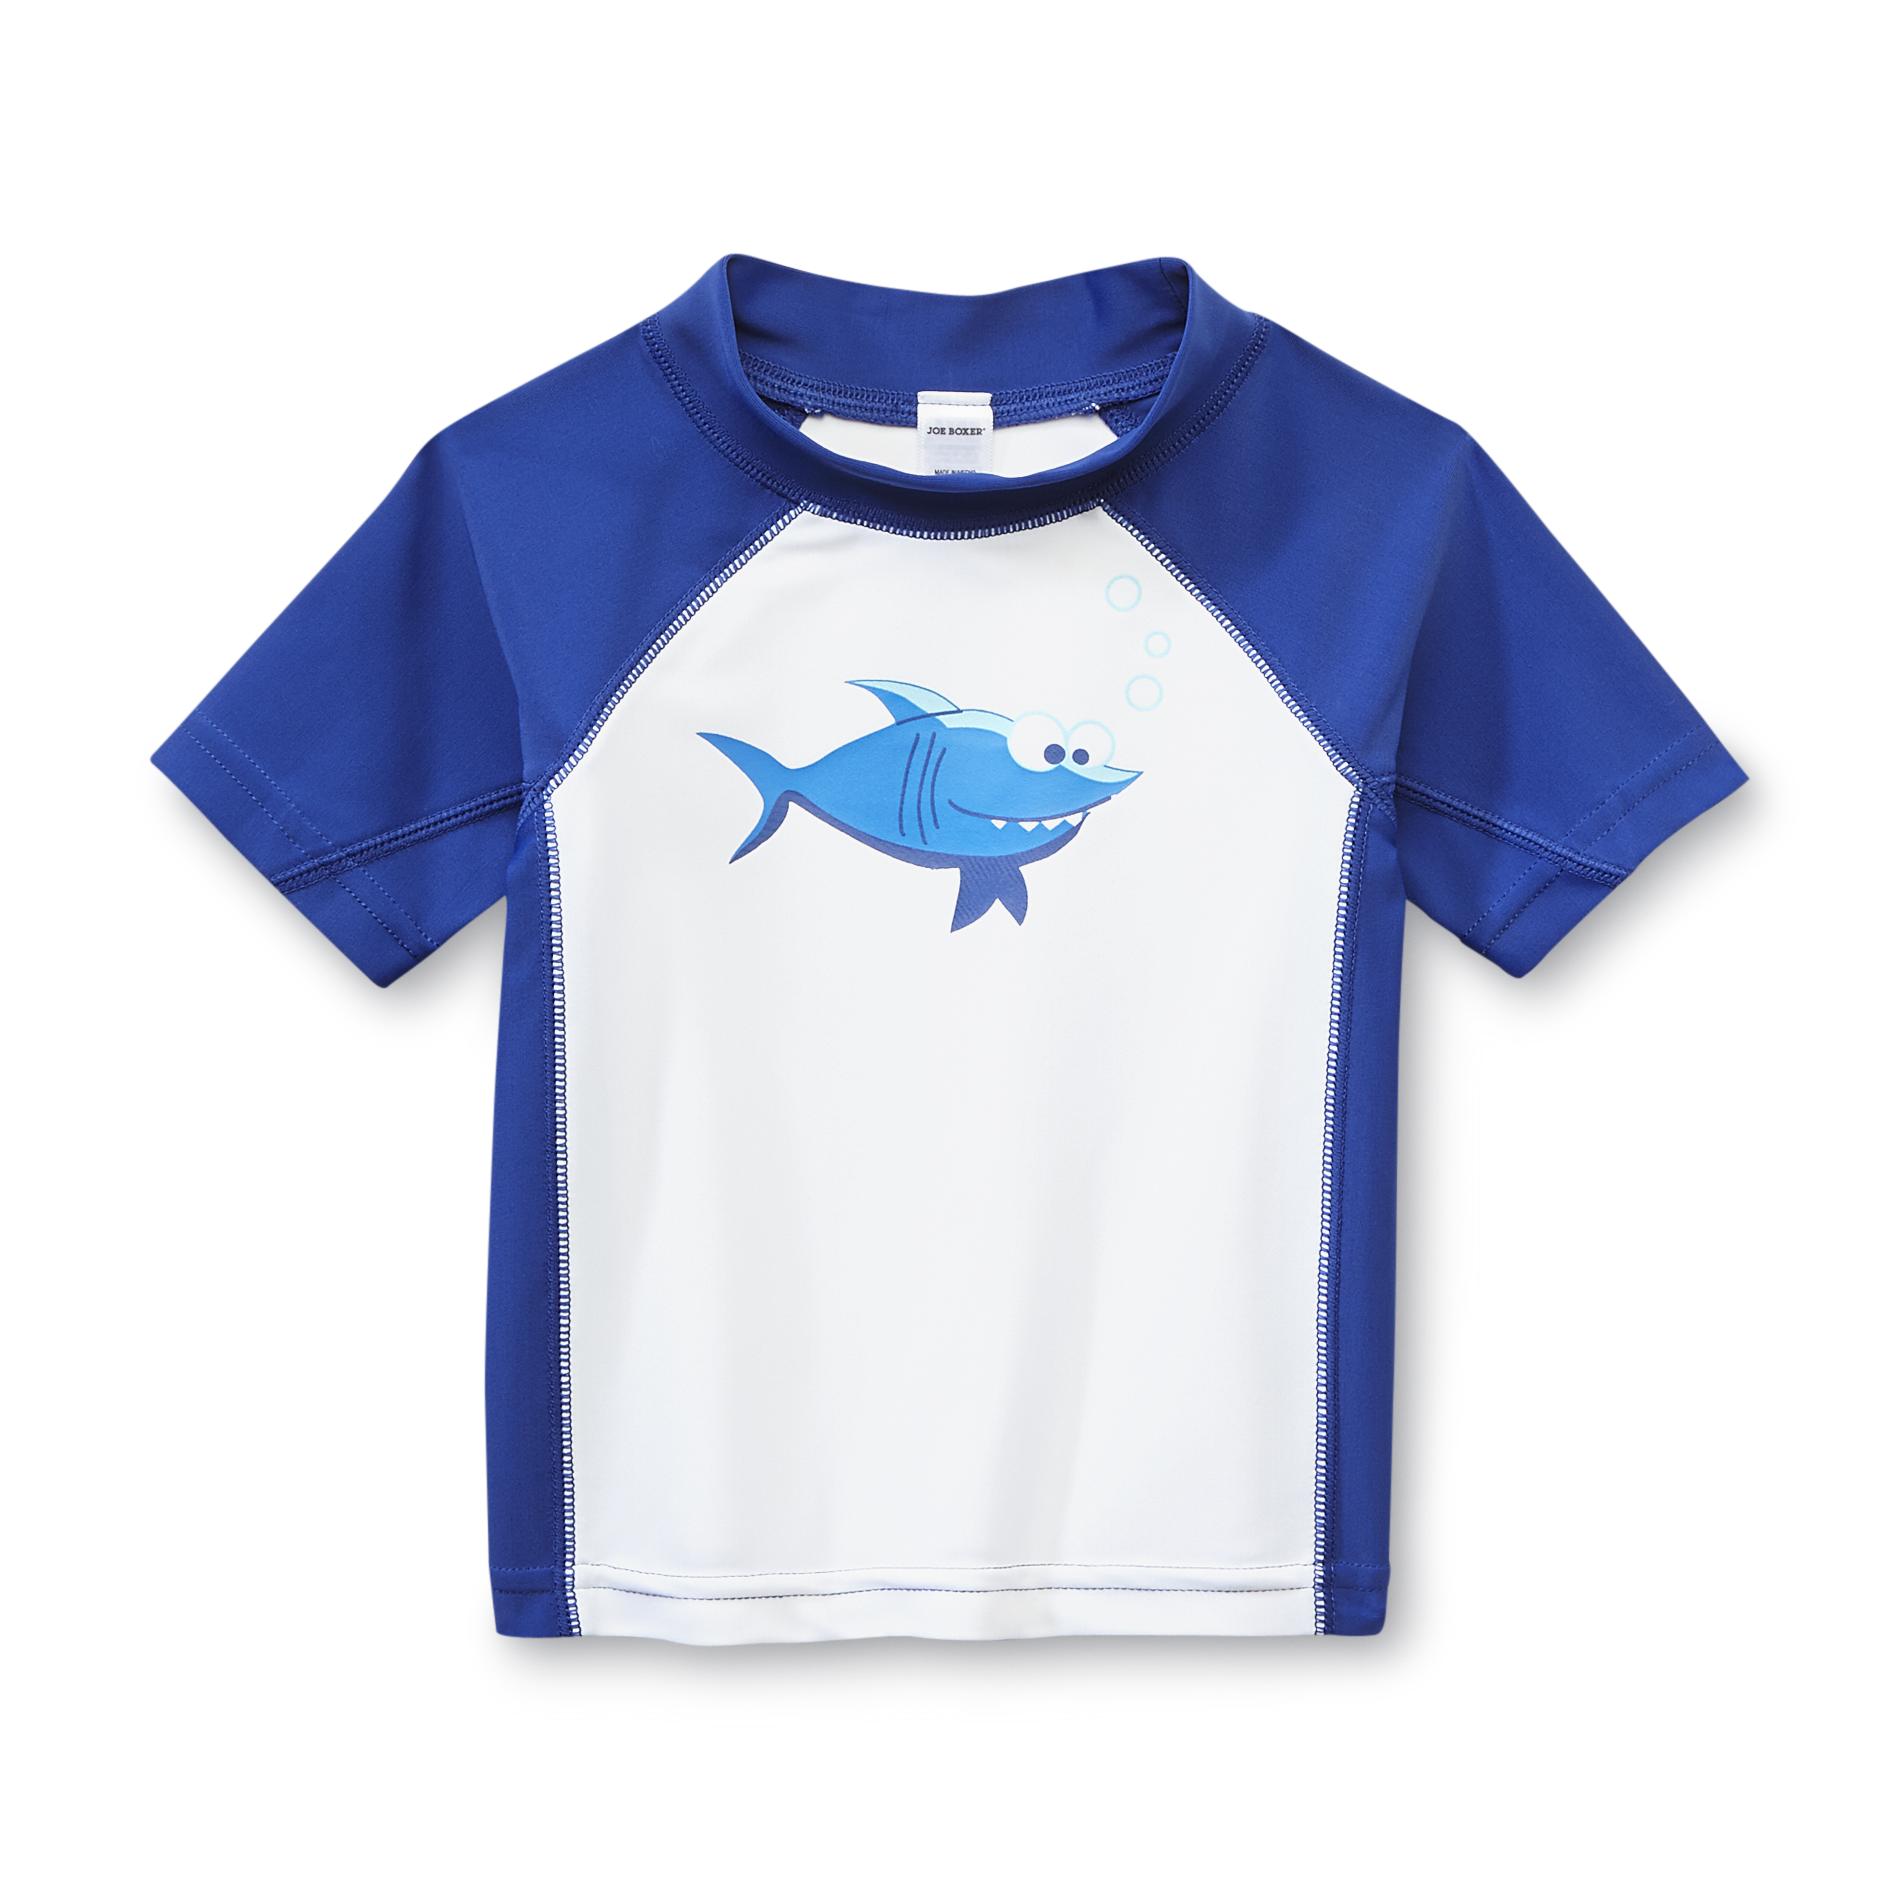 Joe Boxer Infant & Toddler Boy's Rash Guard Swim Shirt - Shark